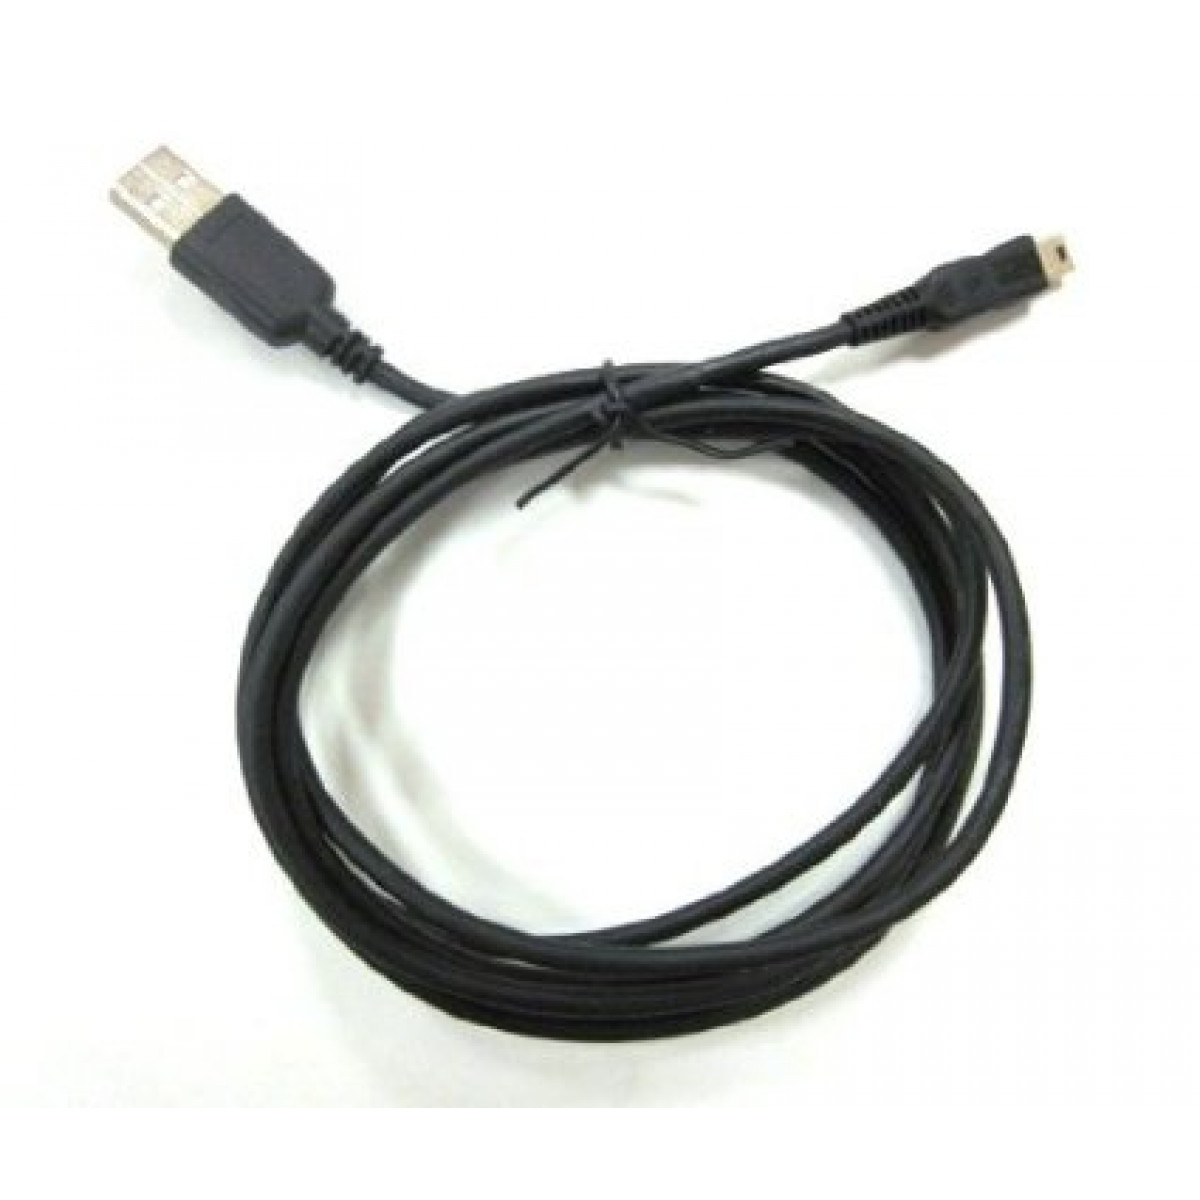 Texas Instruments USB Cable For TI84 Plus Silver TI 89 Titanium Nspire 15' Long! 